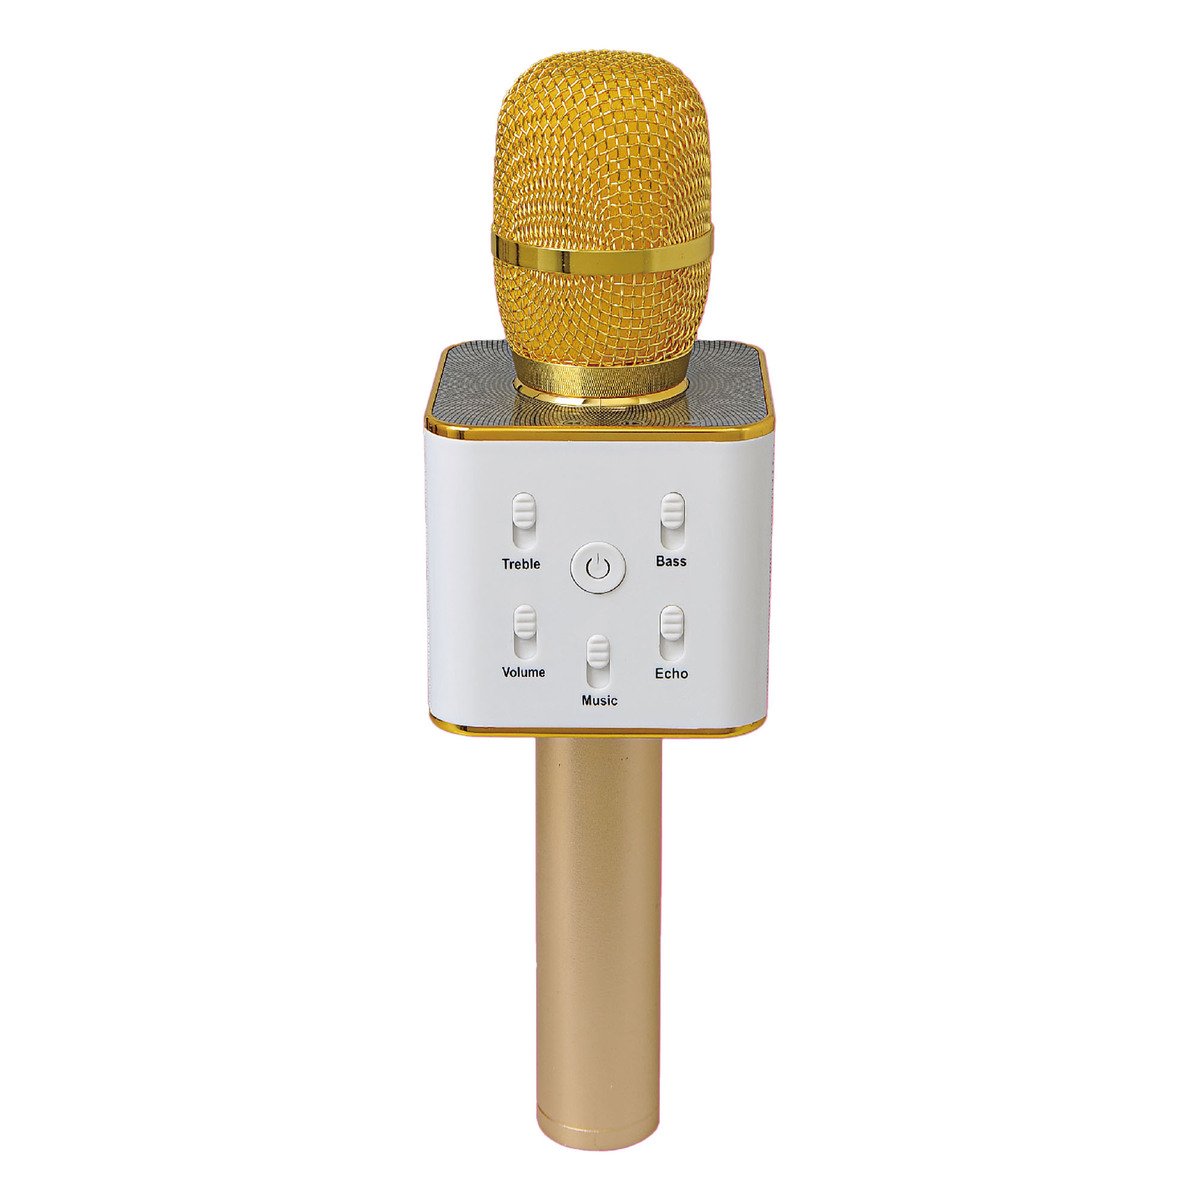 Ikon Bluetooth Microphone with Speaker IK-2873